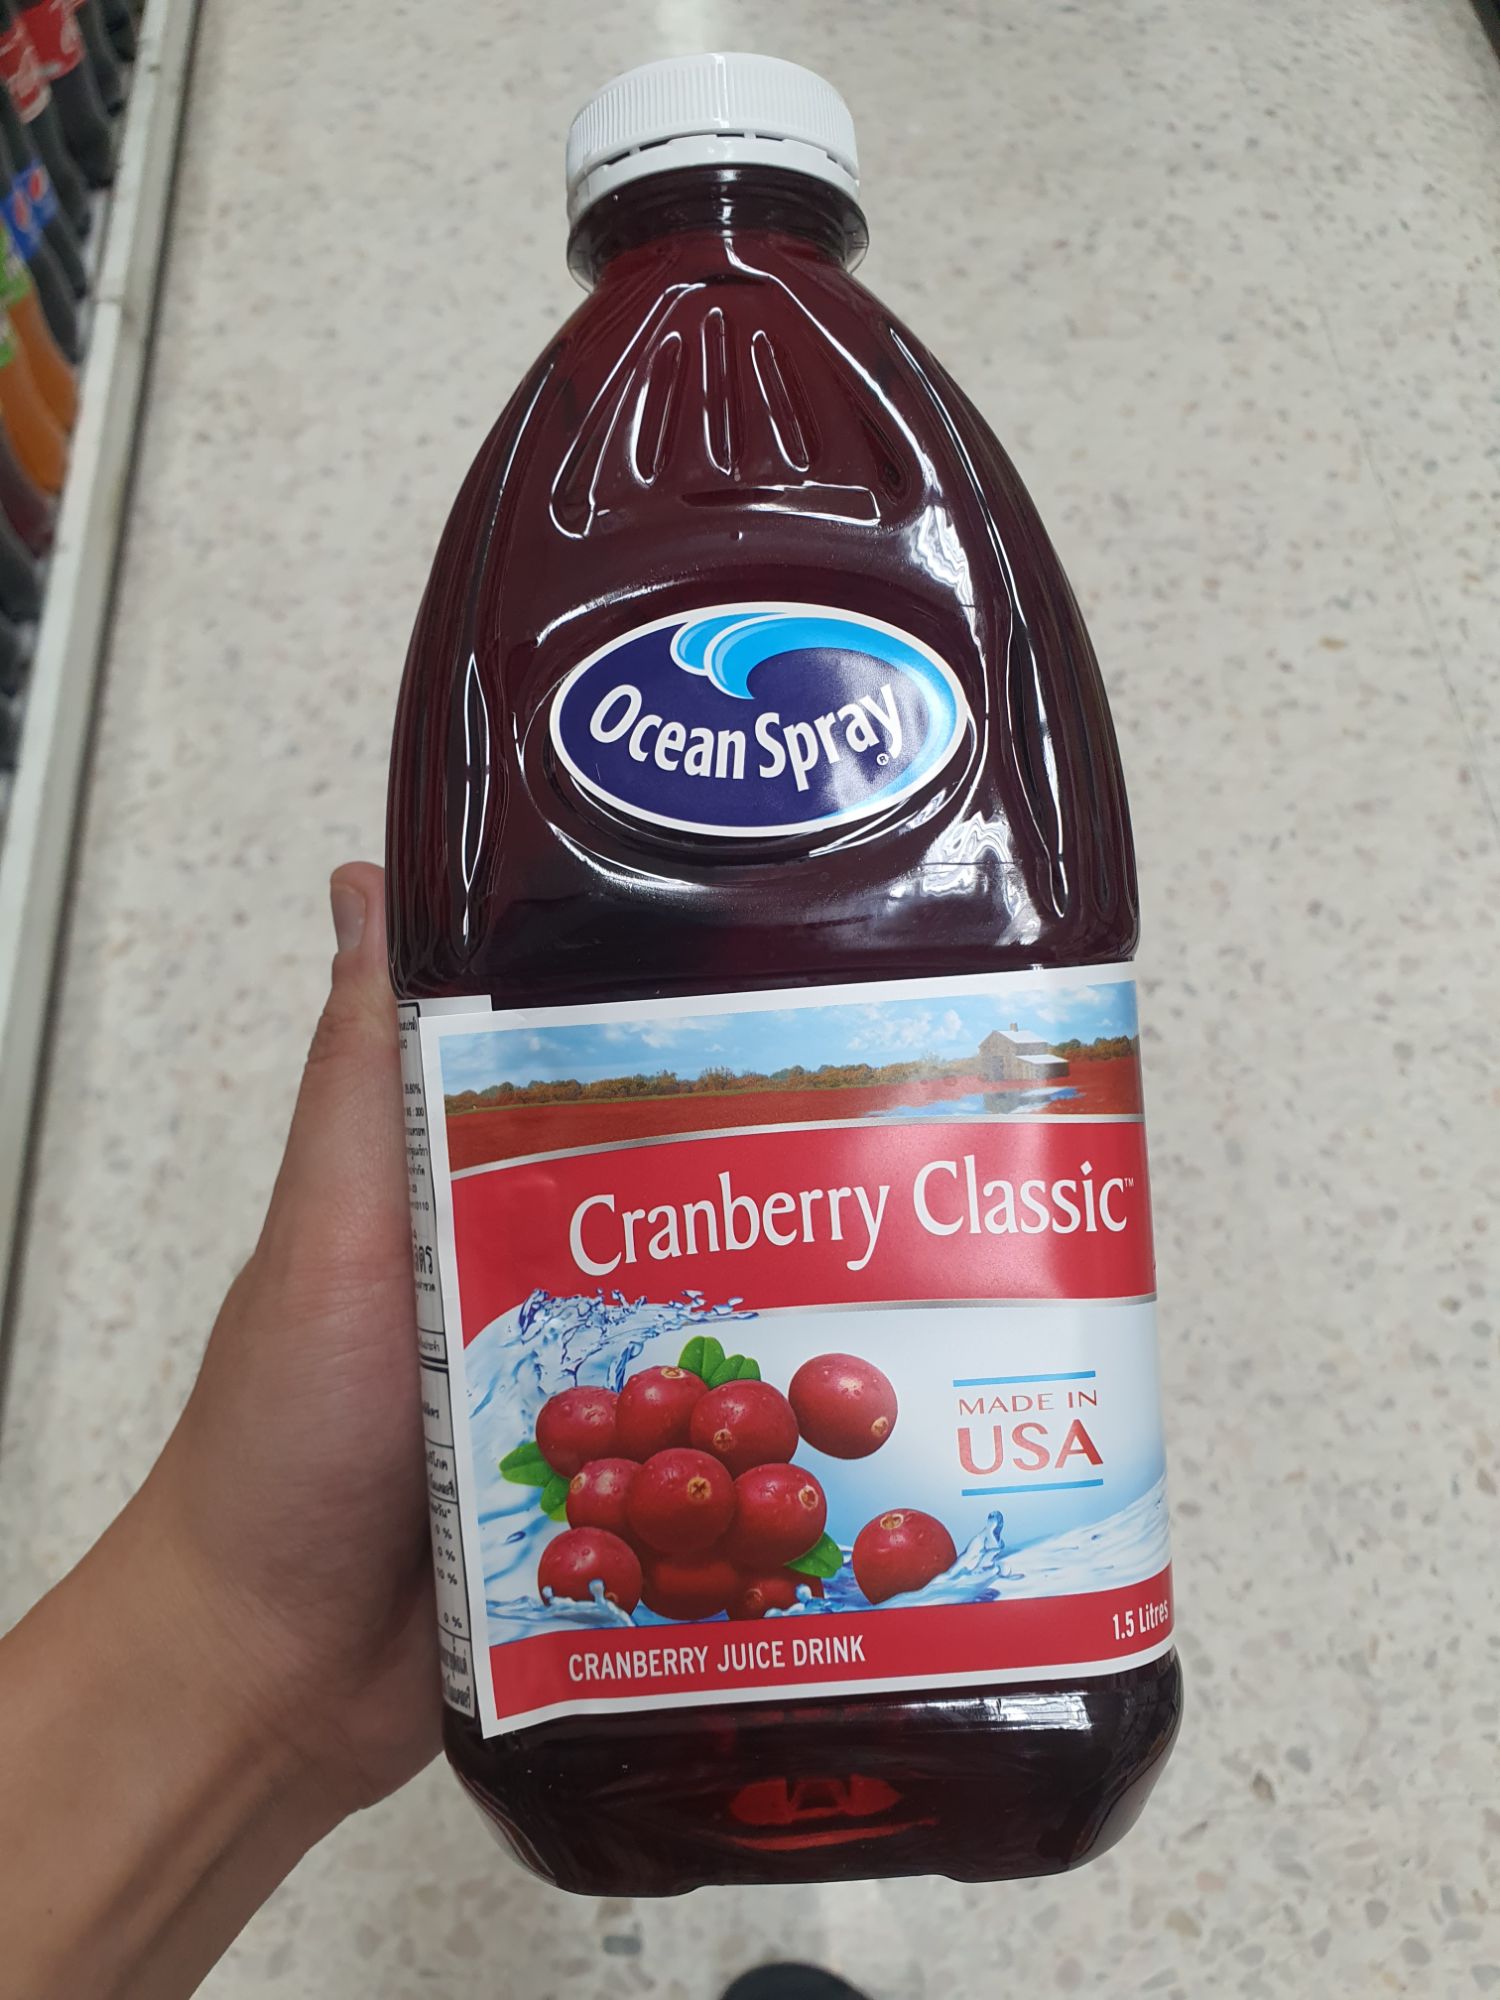 Ocean Spray Cranberry Classic Juice Drink 1.5l